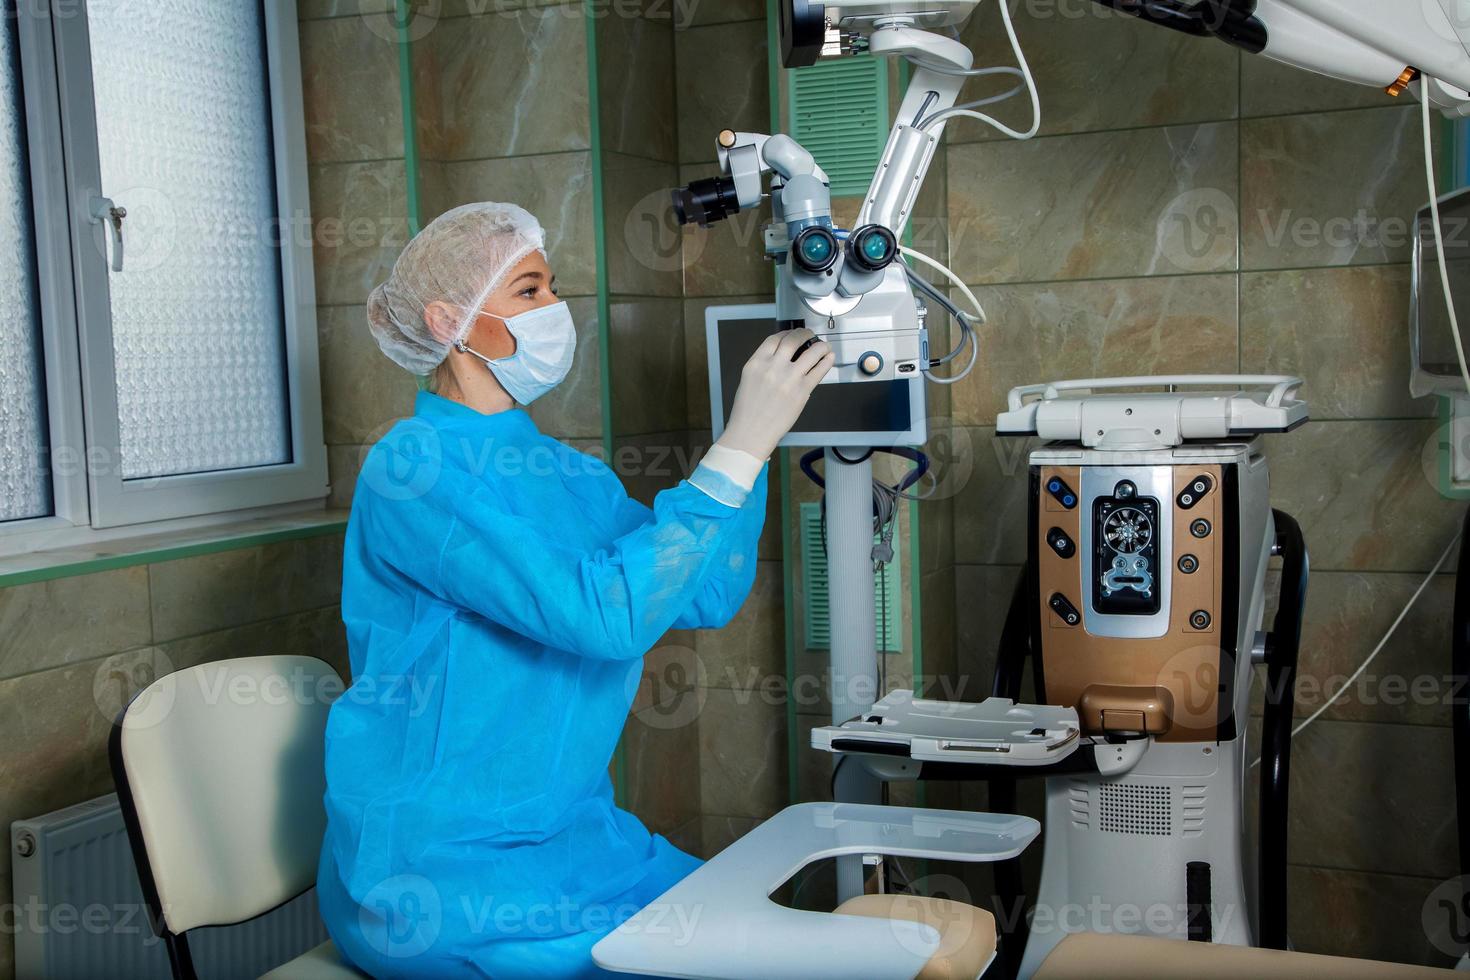 chirurg cheques de in werking microscoop voordat chirurgie foto